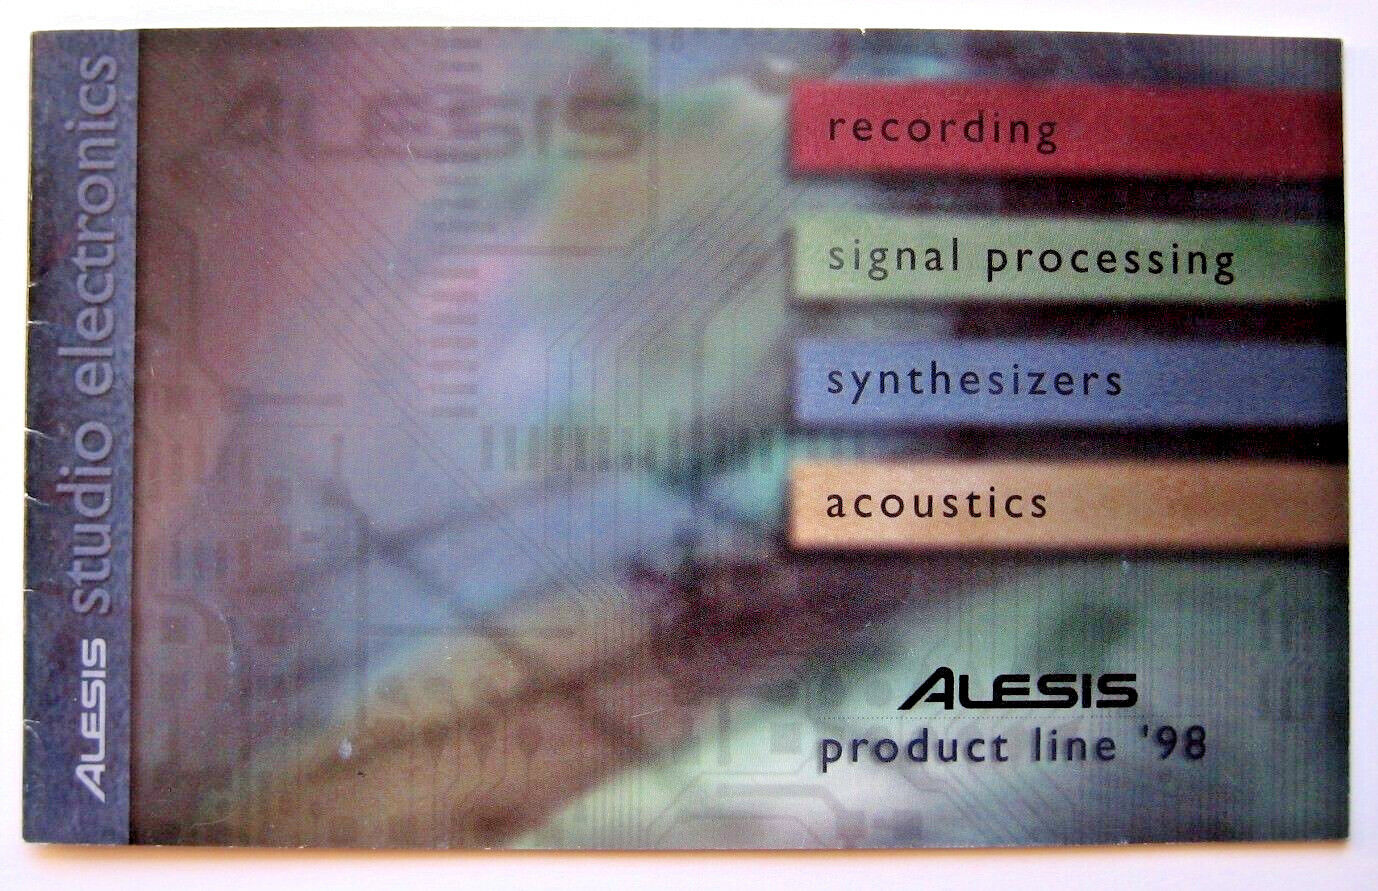 Alesis Studio Electronics 1998 Catalog Synthesizers Recording Signal Processing.